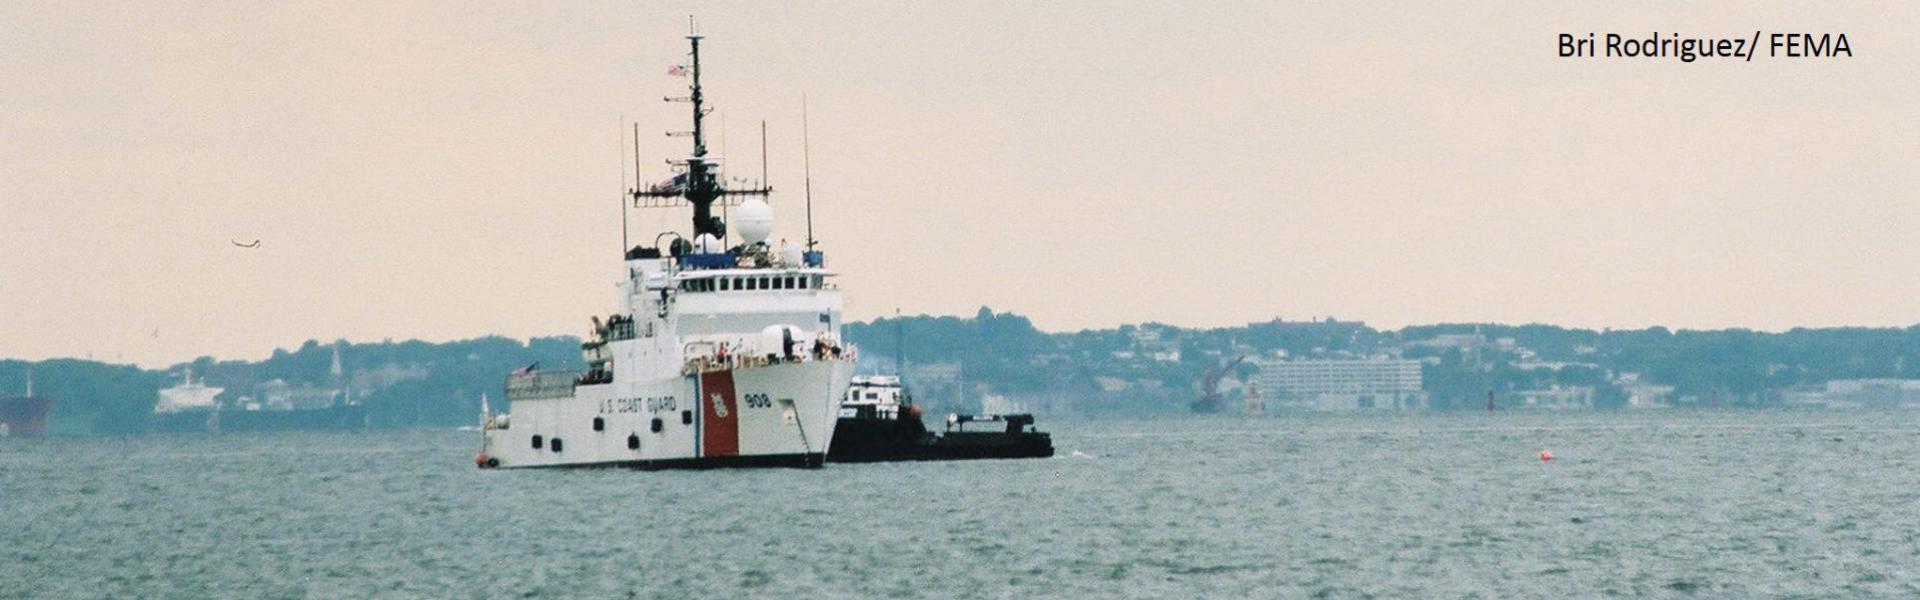 US Coast Guard ship on the water. Photo by Bri Rodriguez, FEMA